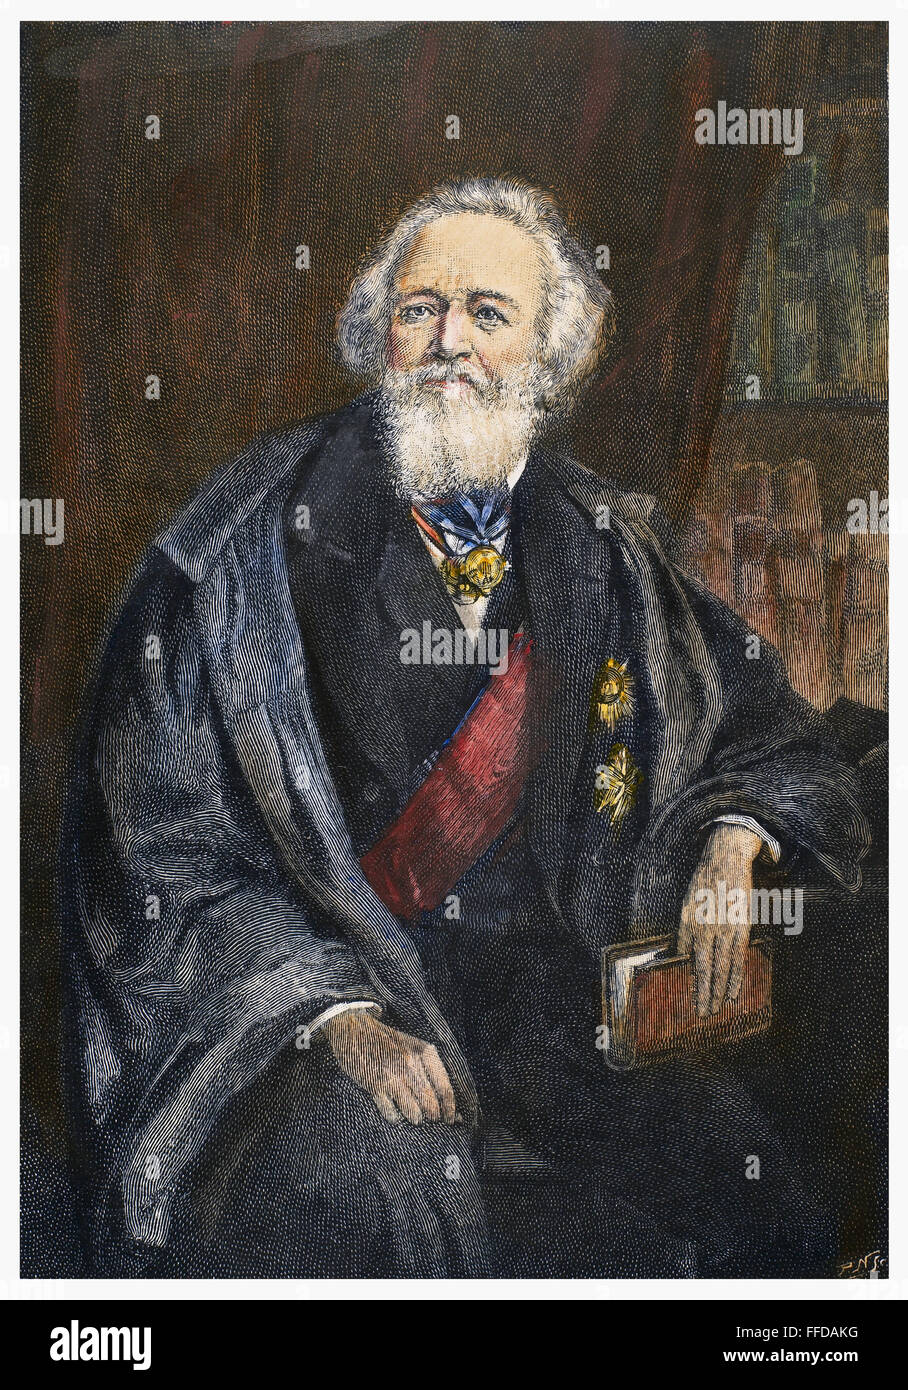 LEOPOLD von RANKE /n(1795-1886). German historian. Wood engraving, English, 1895. Stock Photo